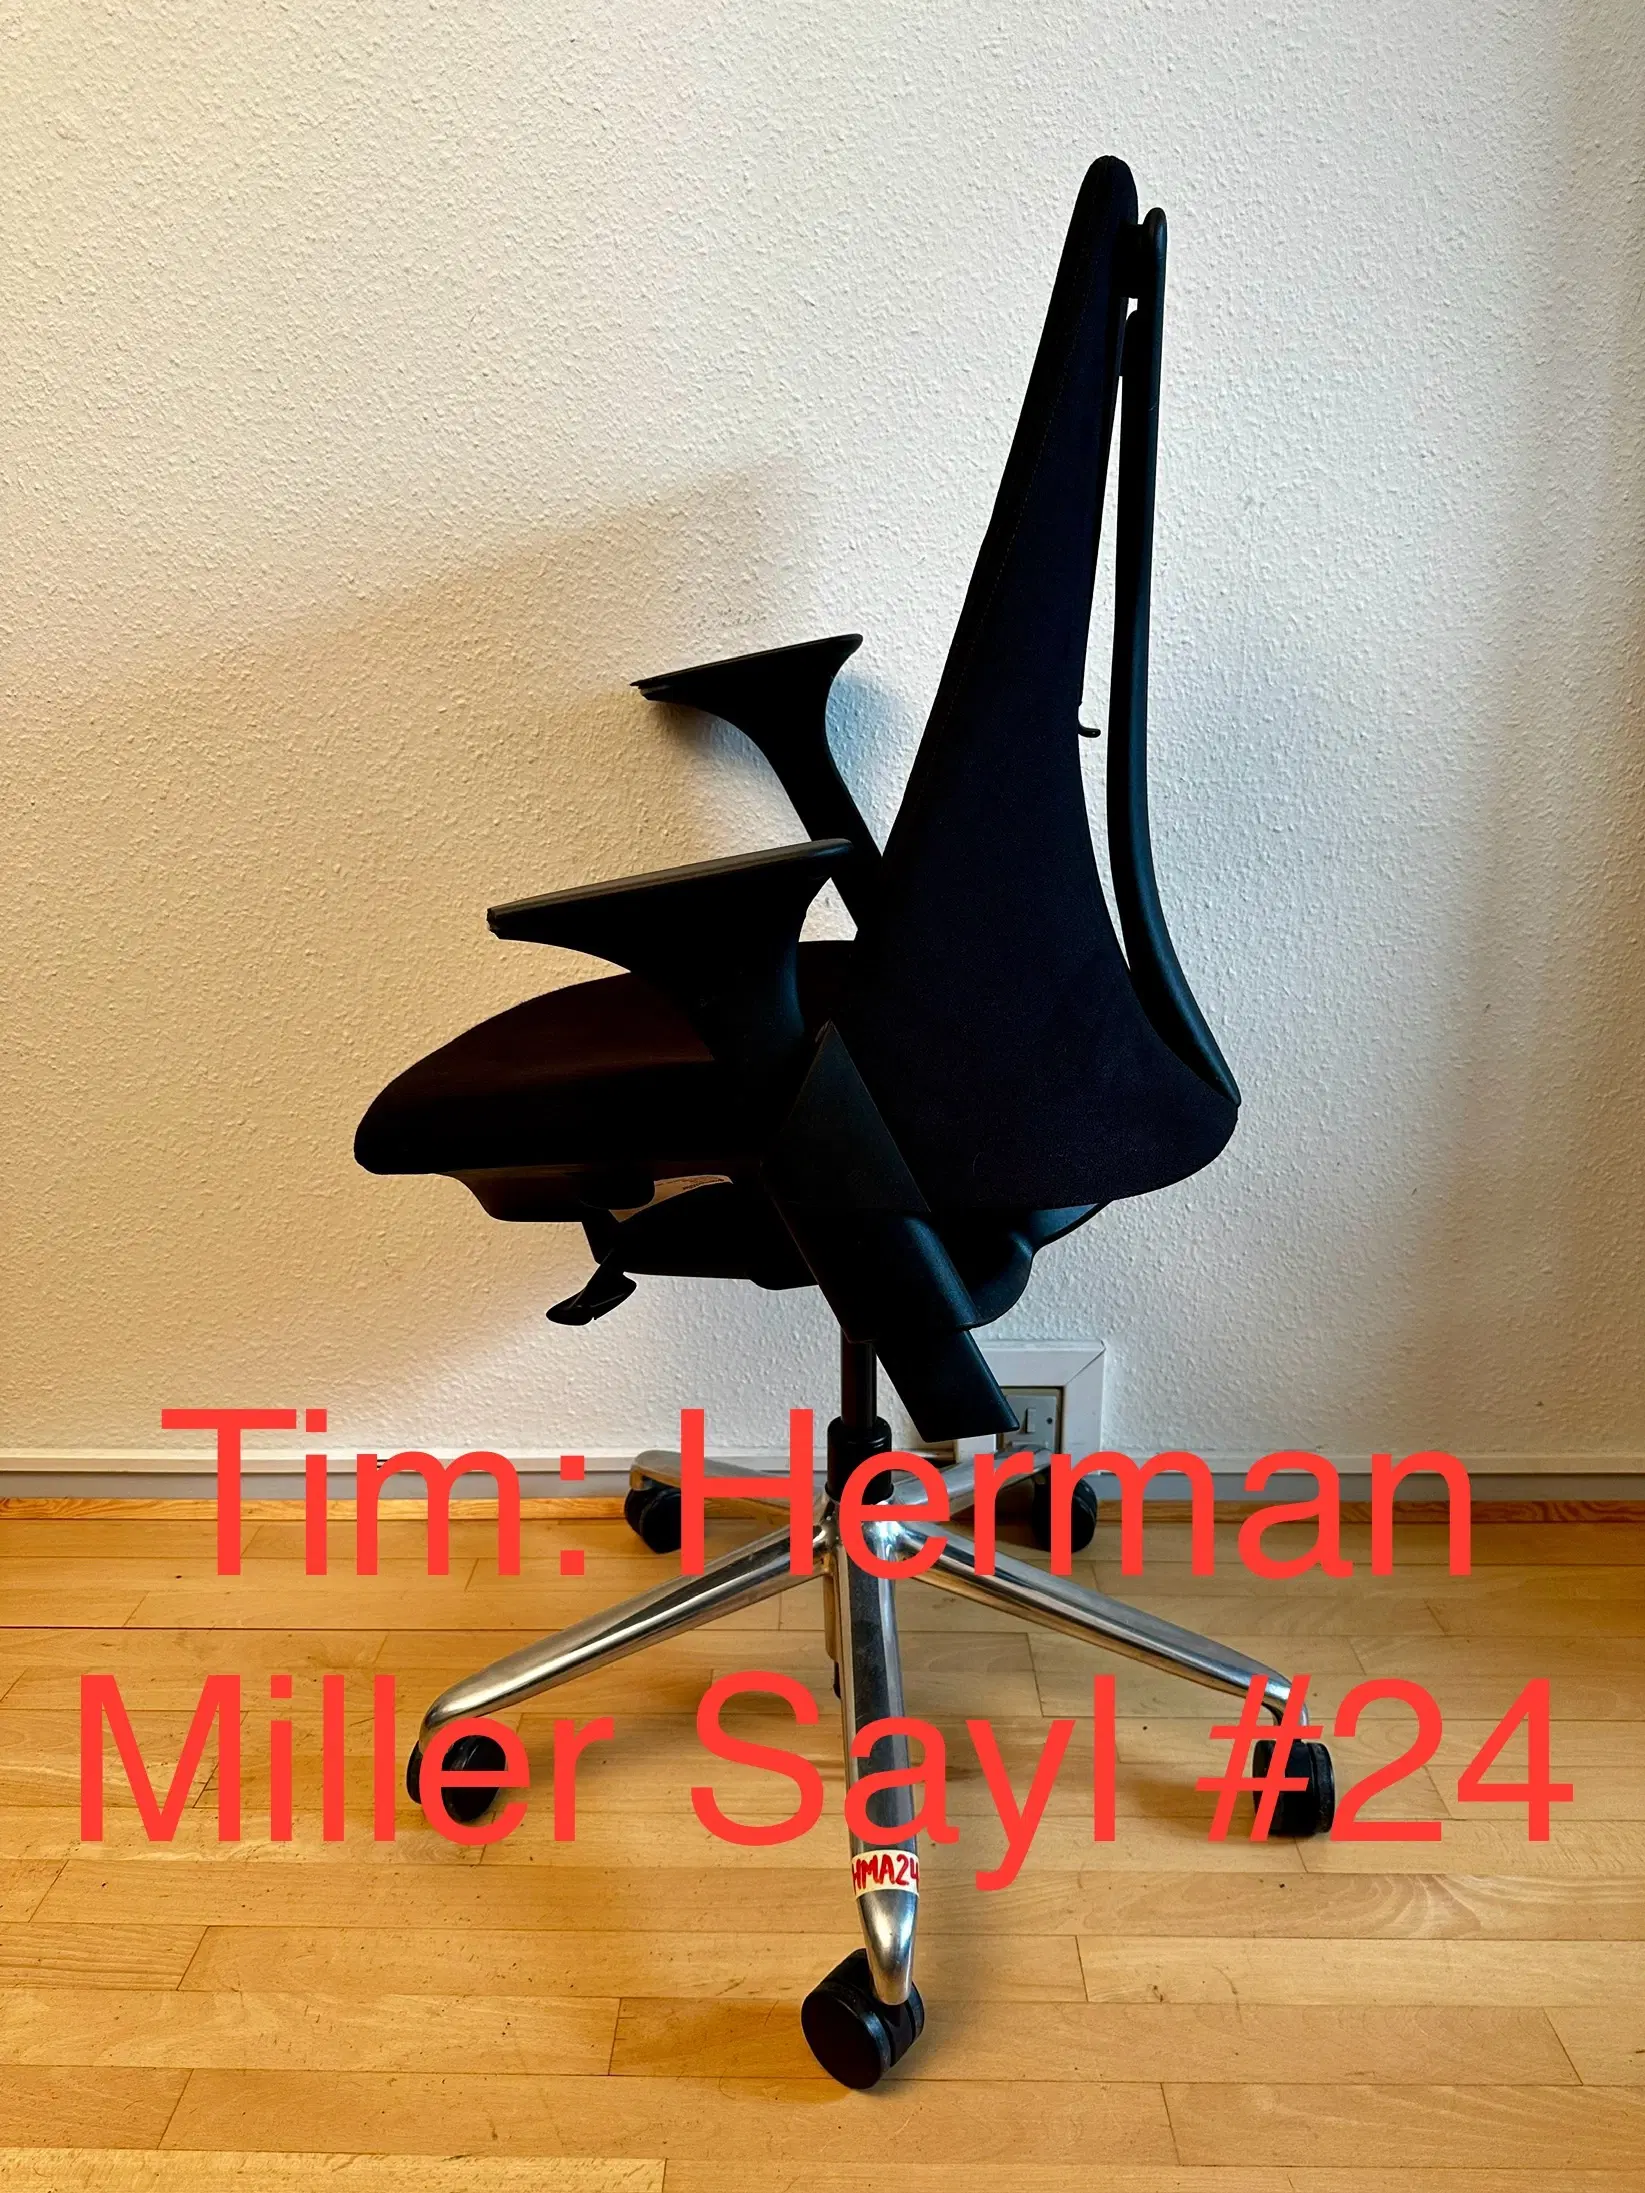 Herman Miller Sayl